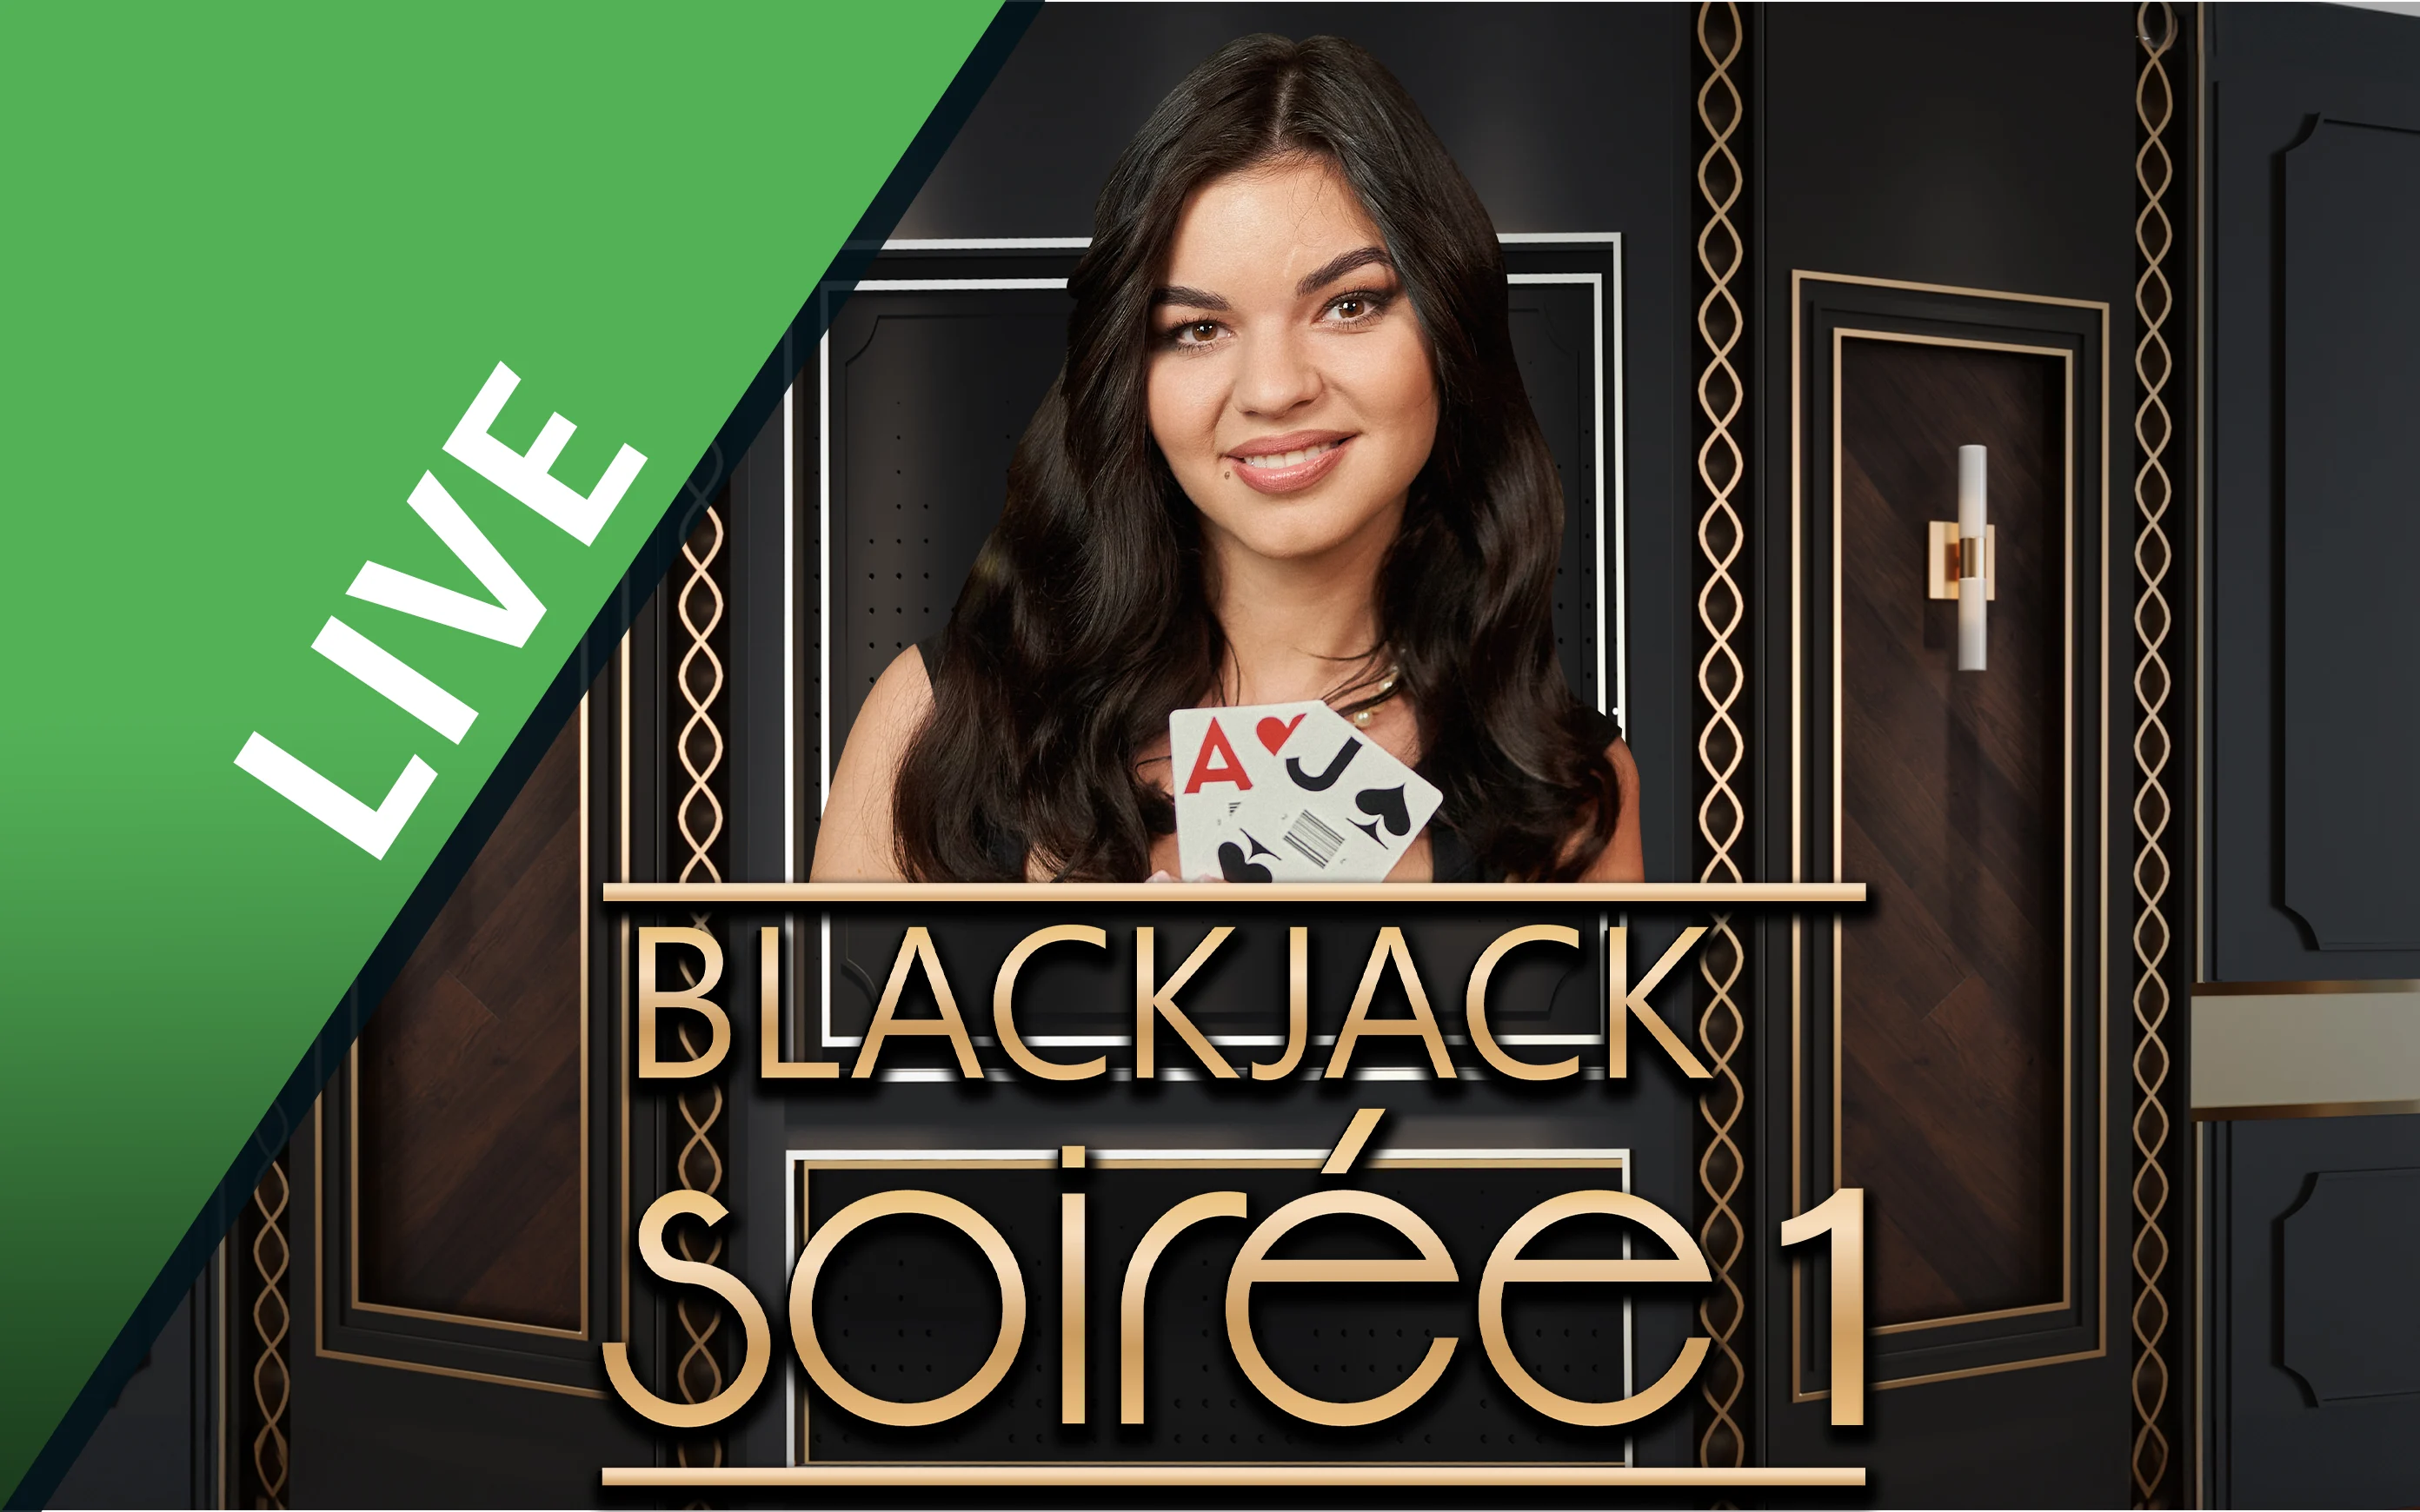 Speel Blackjack Soirée 1 op Starcasino.be online casino